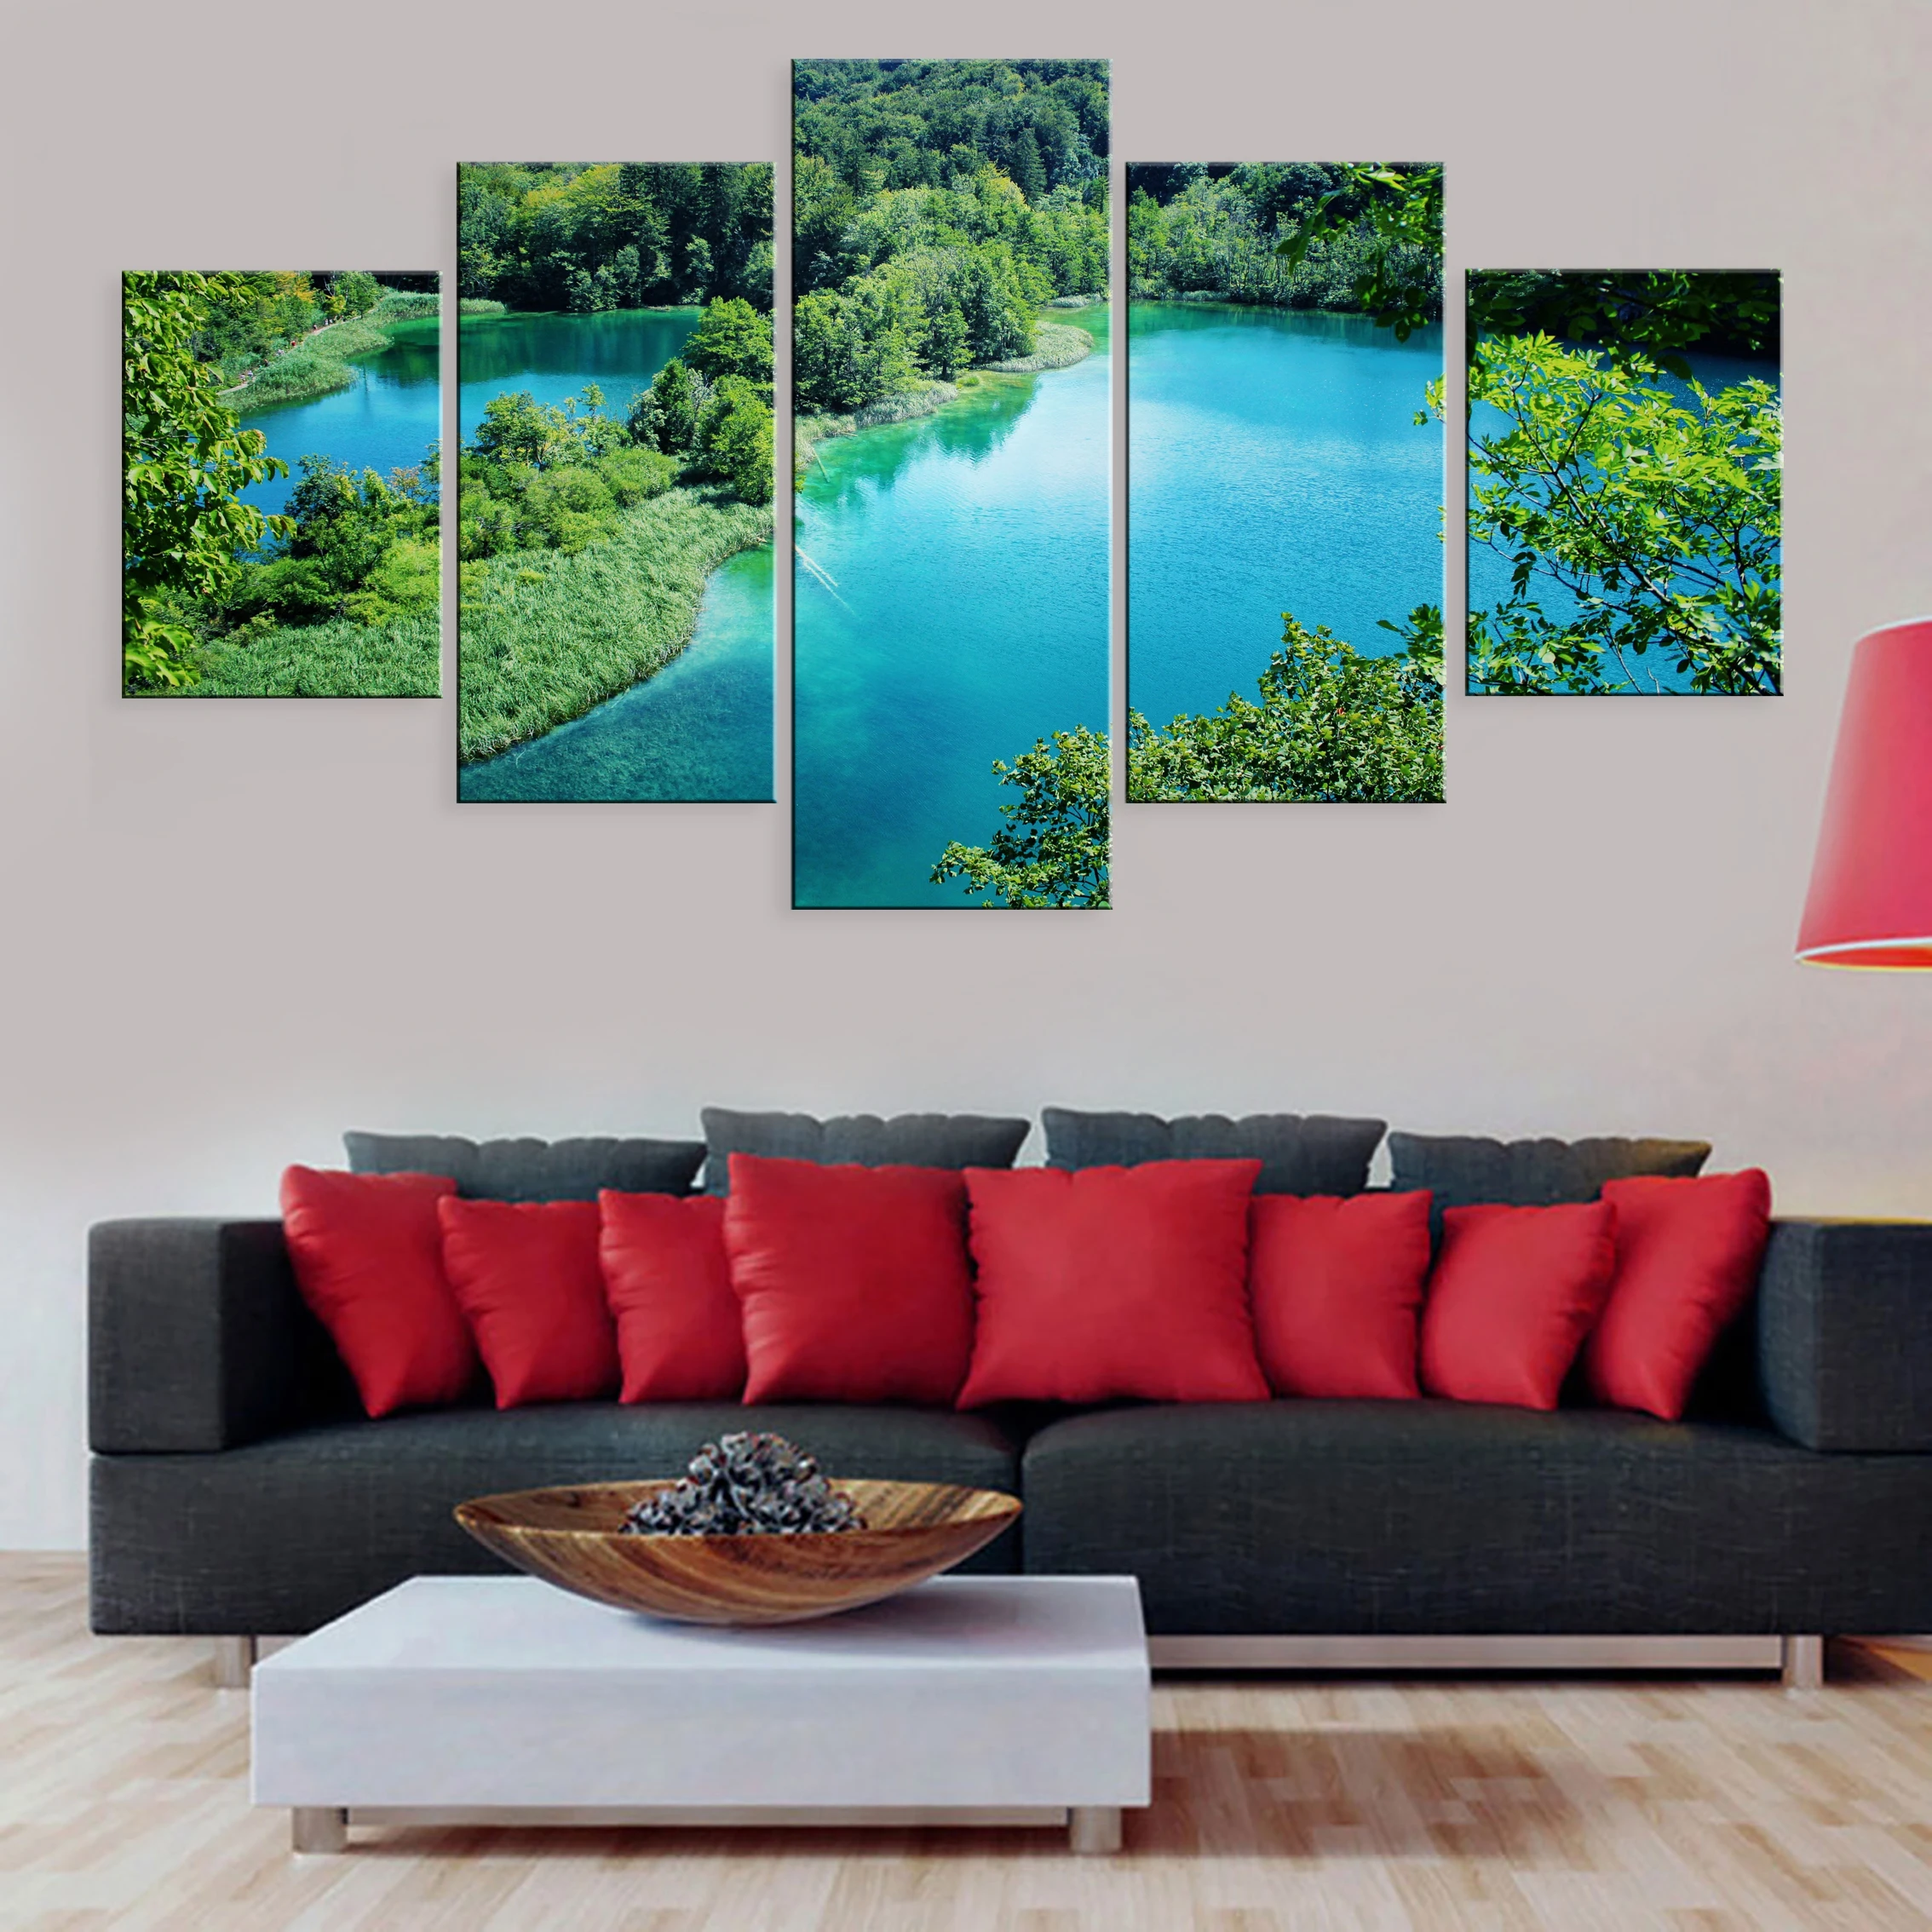 

Hd 5 Pieces Artwork Poster Canvas Decor Framework Landscape Beautiful Scenery Lake Forest Plitvice Lakes National Park